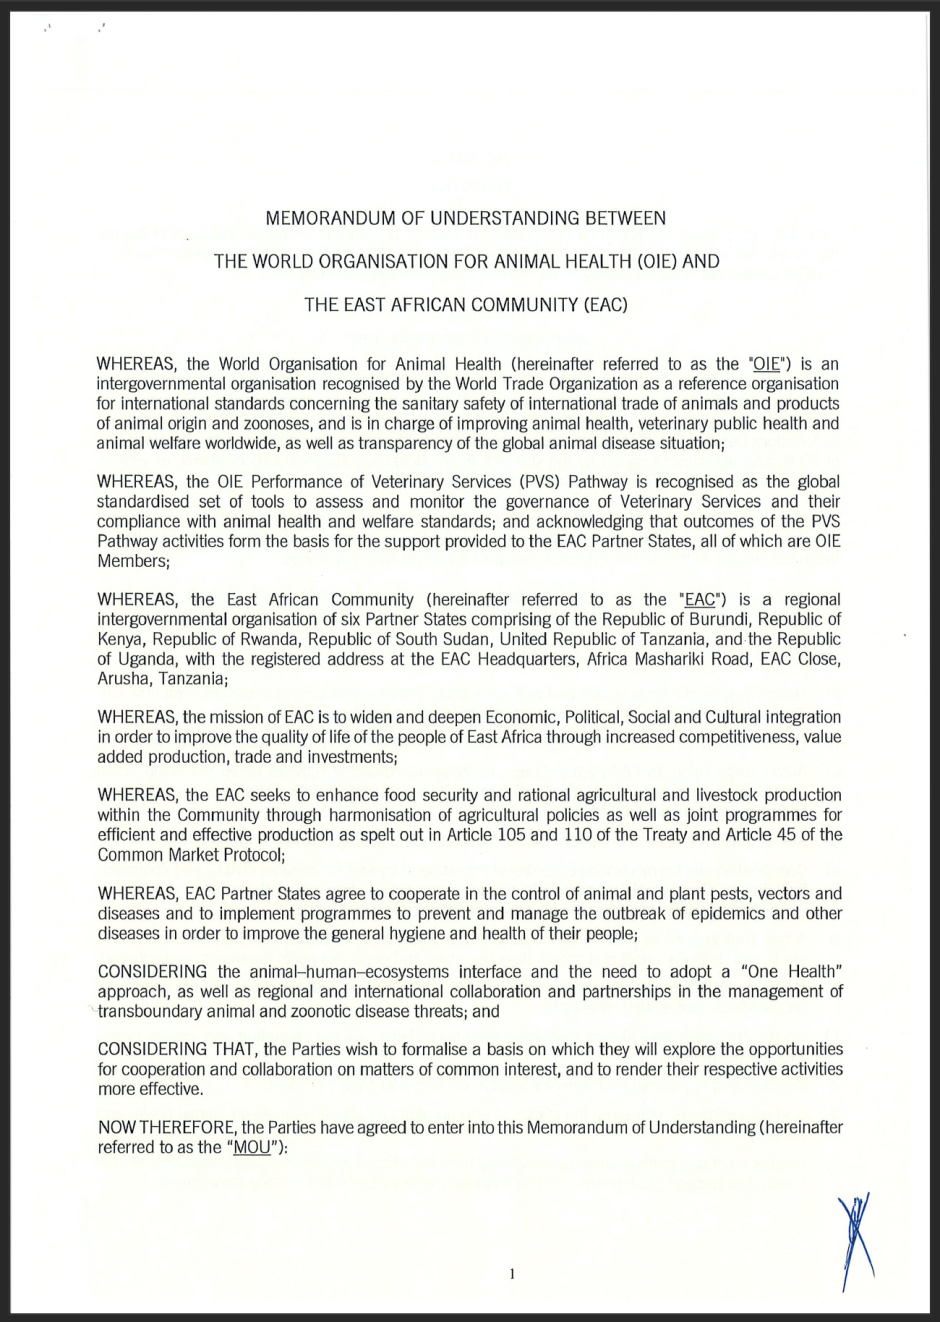 Memorandum of Understanding between the East African Community (EAC) and the World Organisation for Animal Health (OIE)